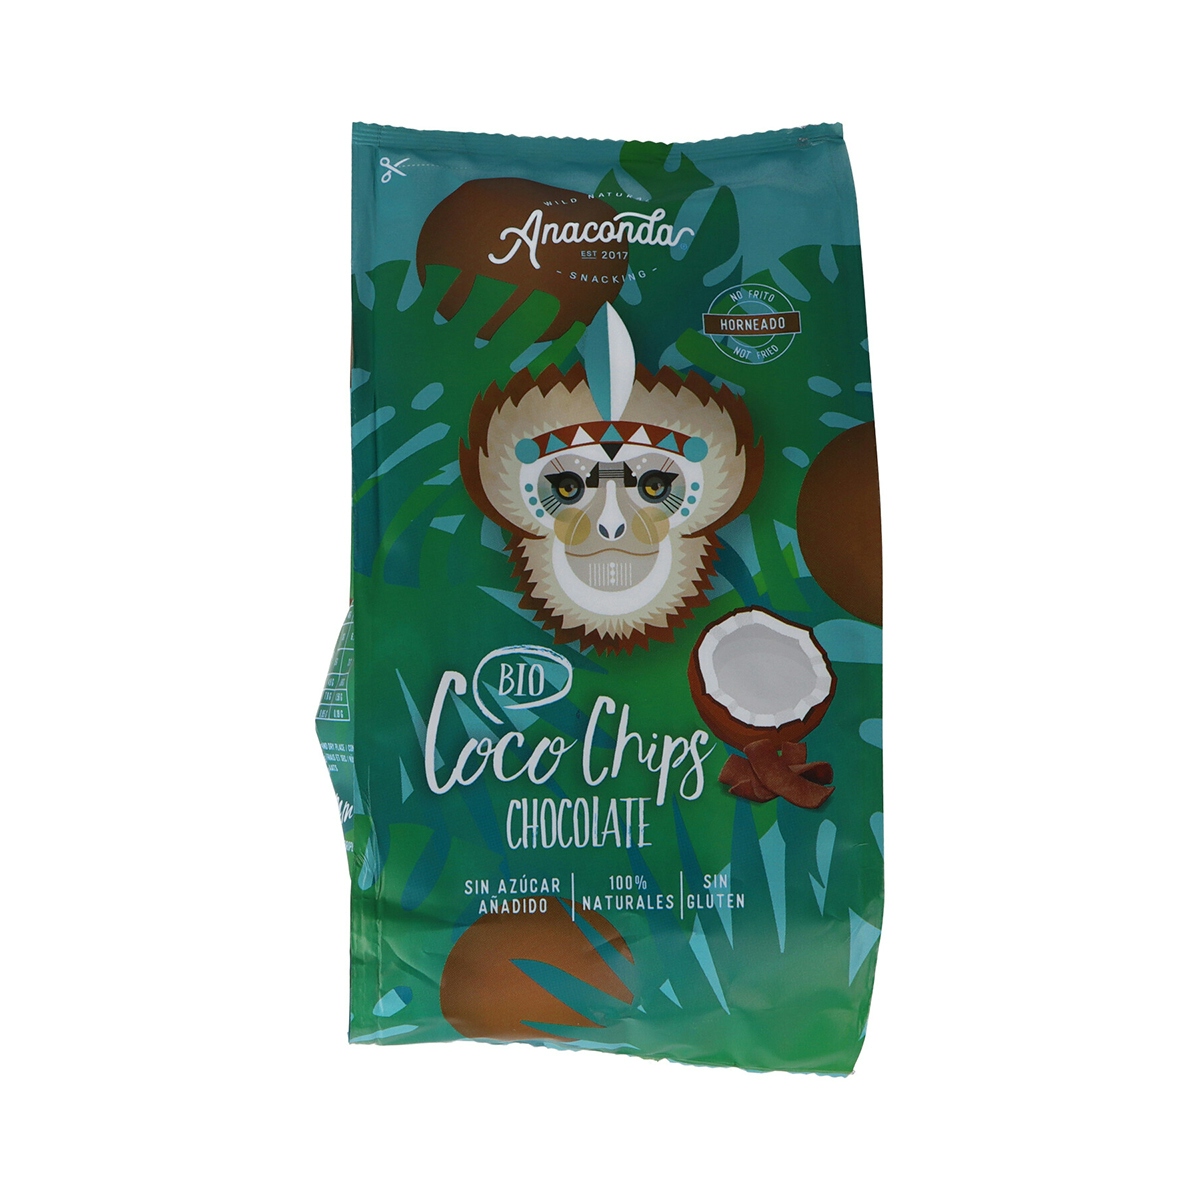 Coco chips chocolate bio Anaconda 60 gr